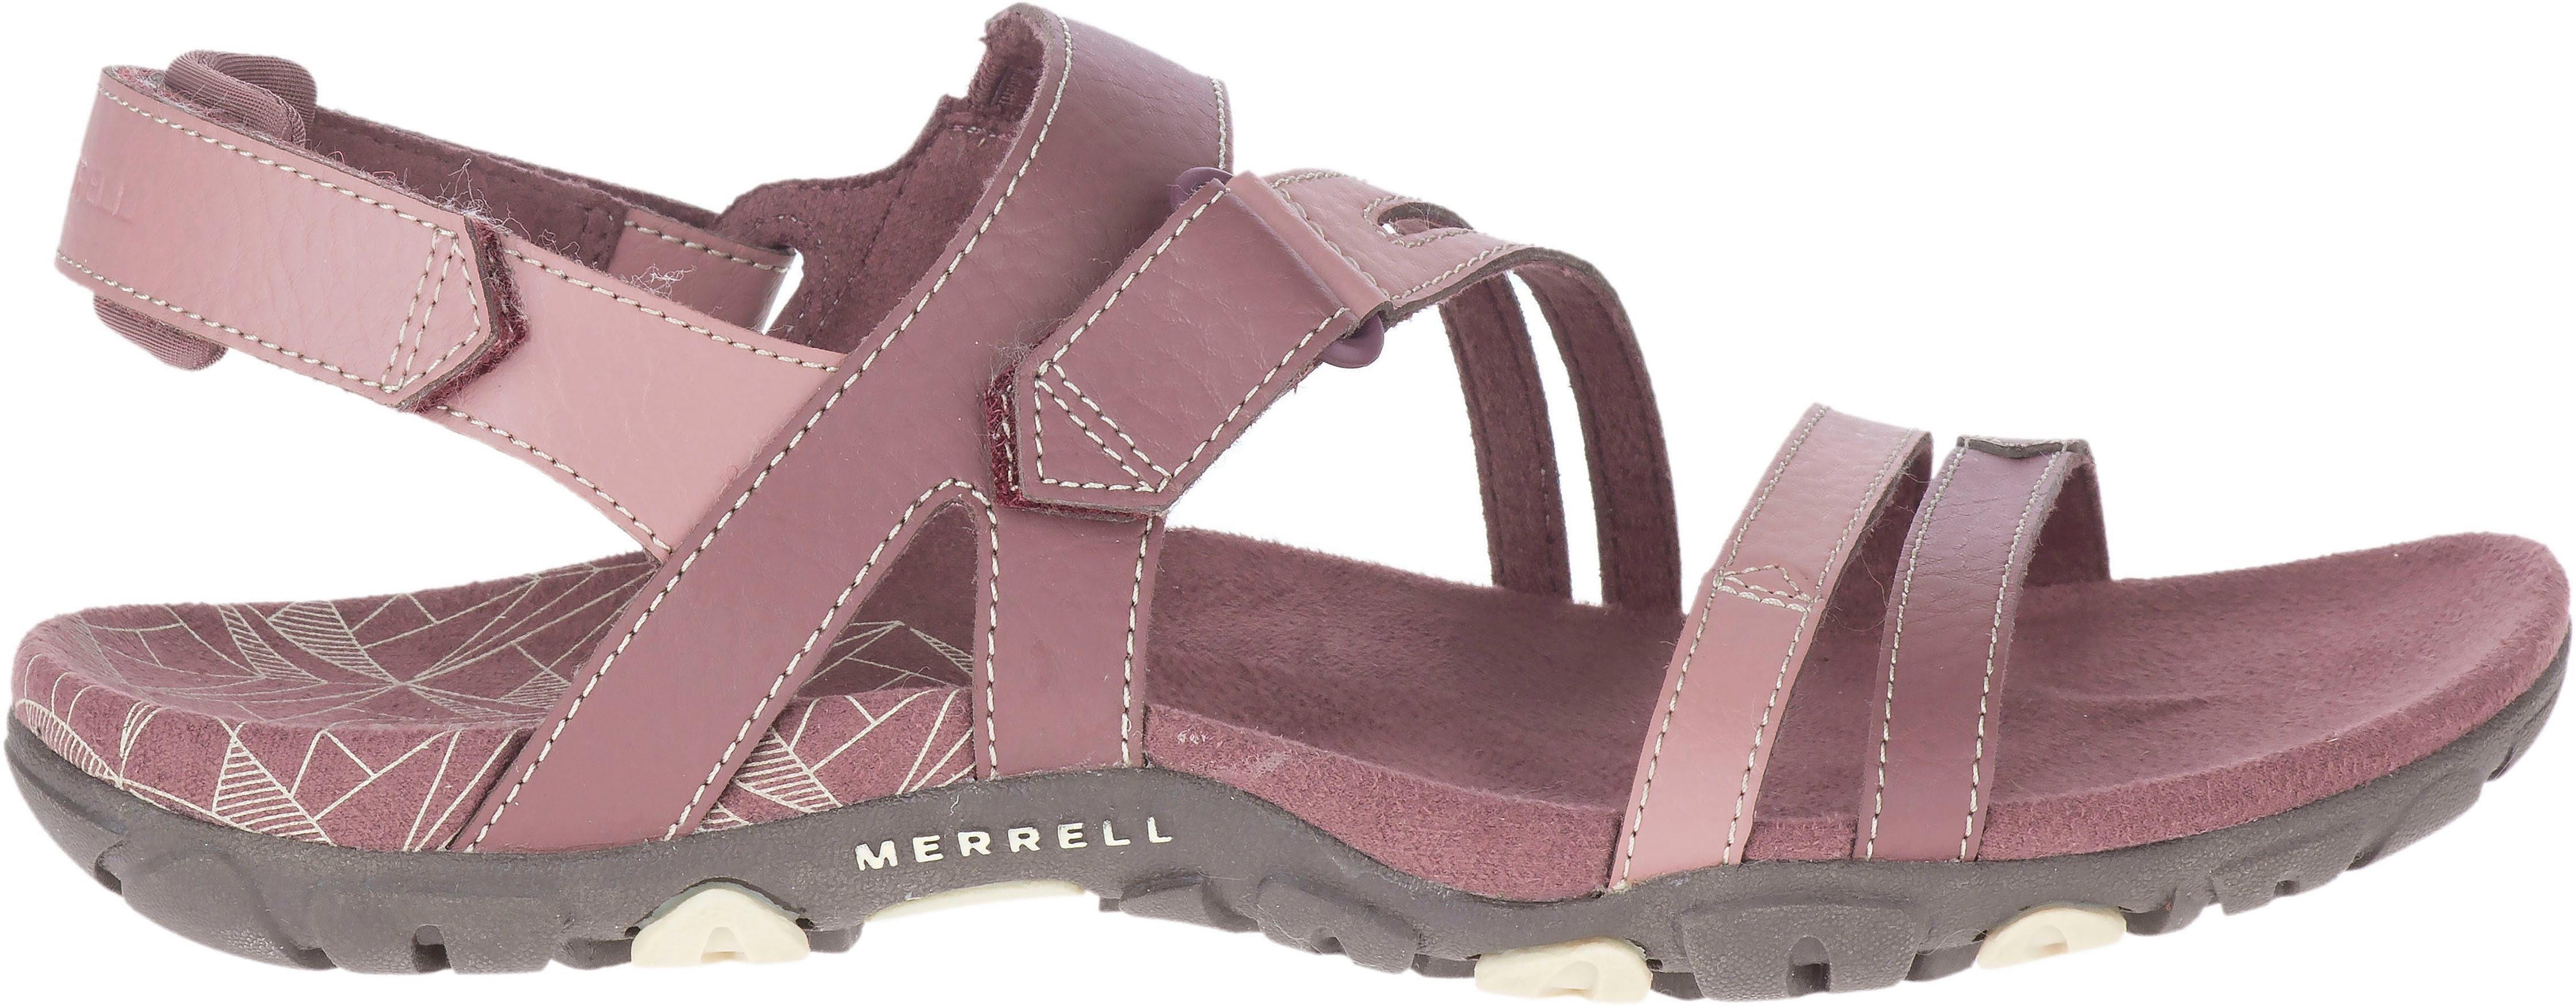 Merrell SANDSPUR ROSE CONVERT mit Sandale Klettverschluss